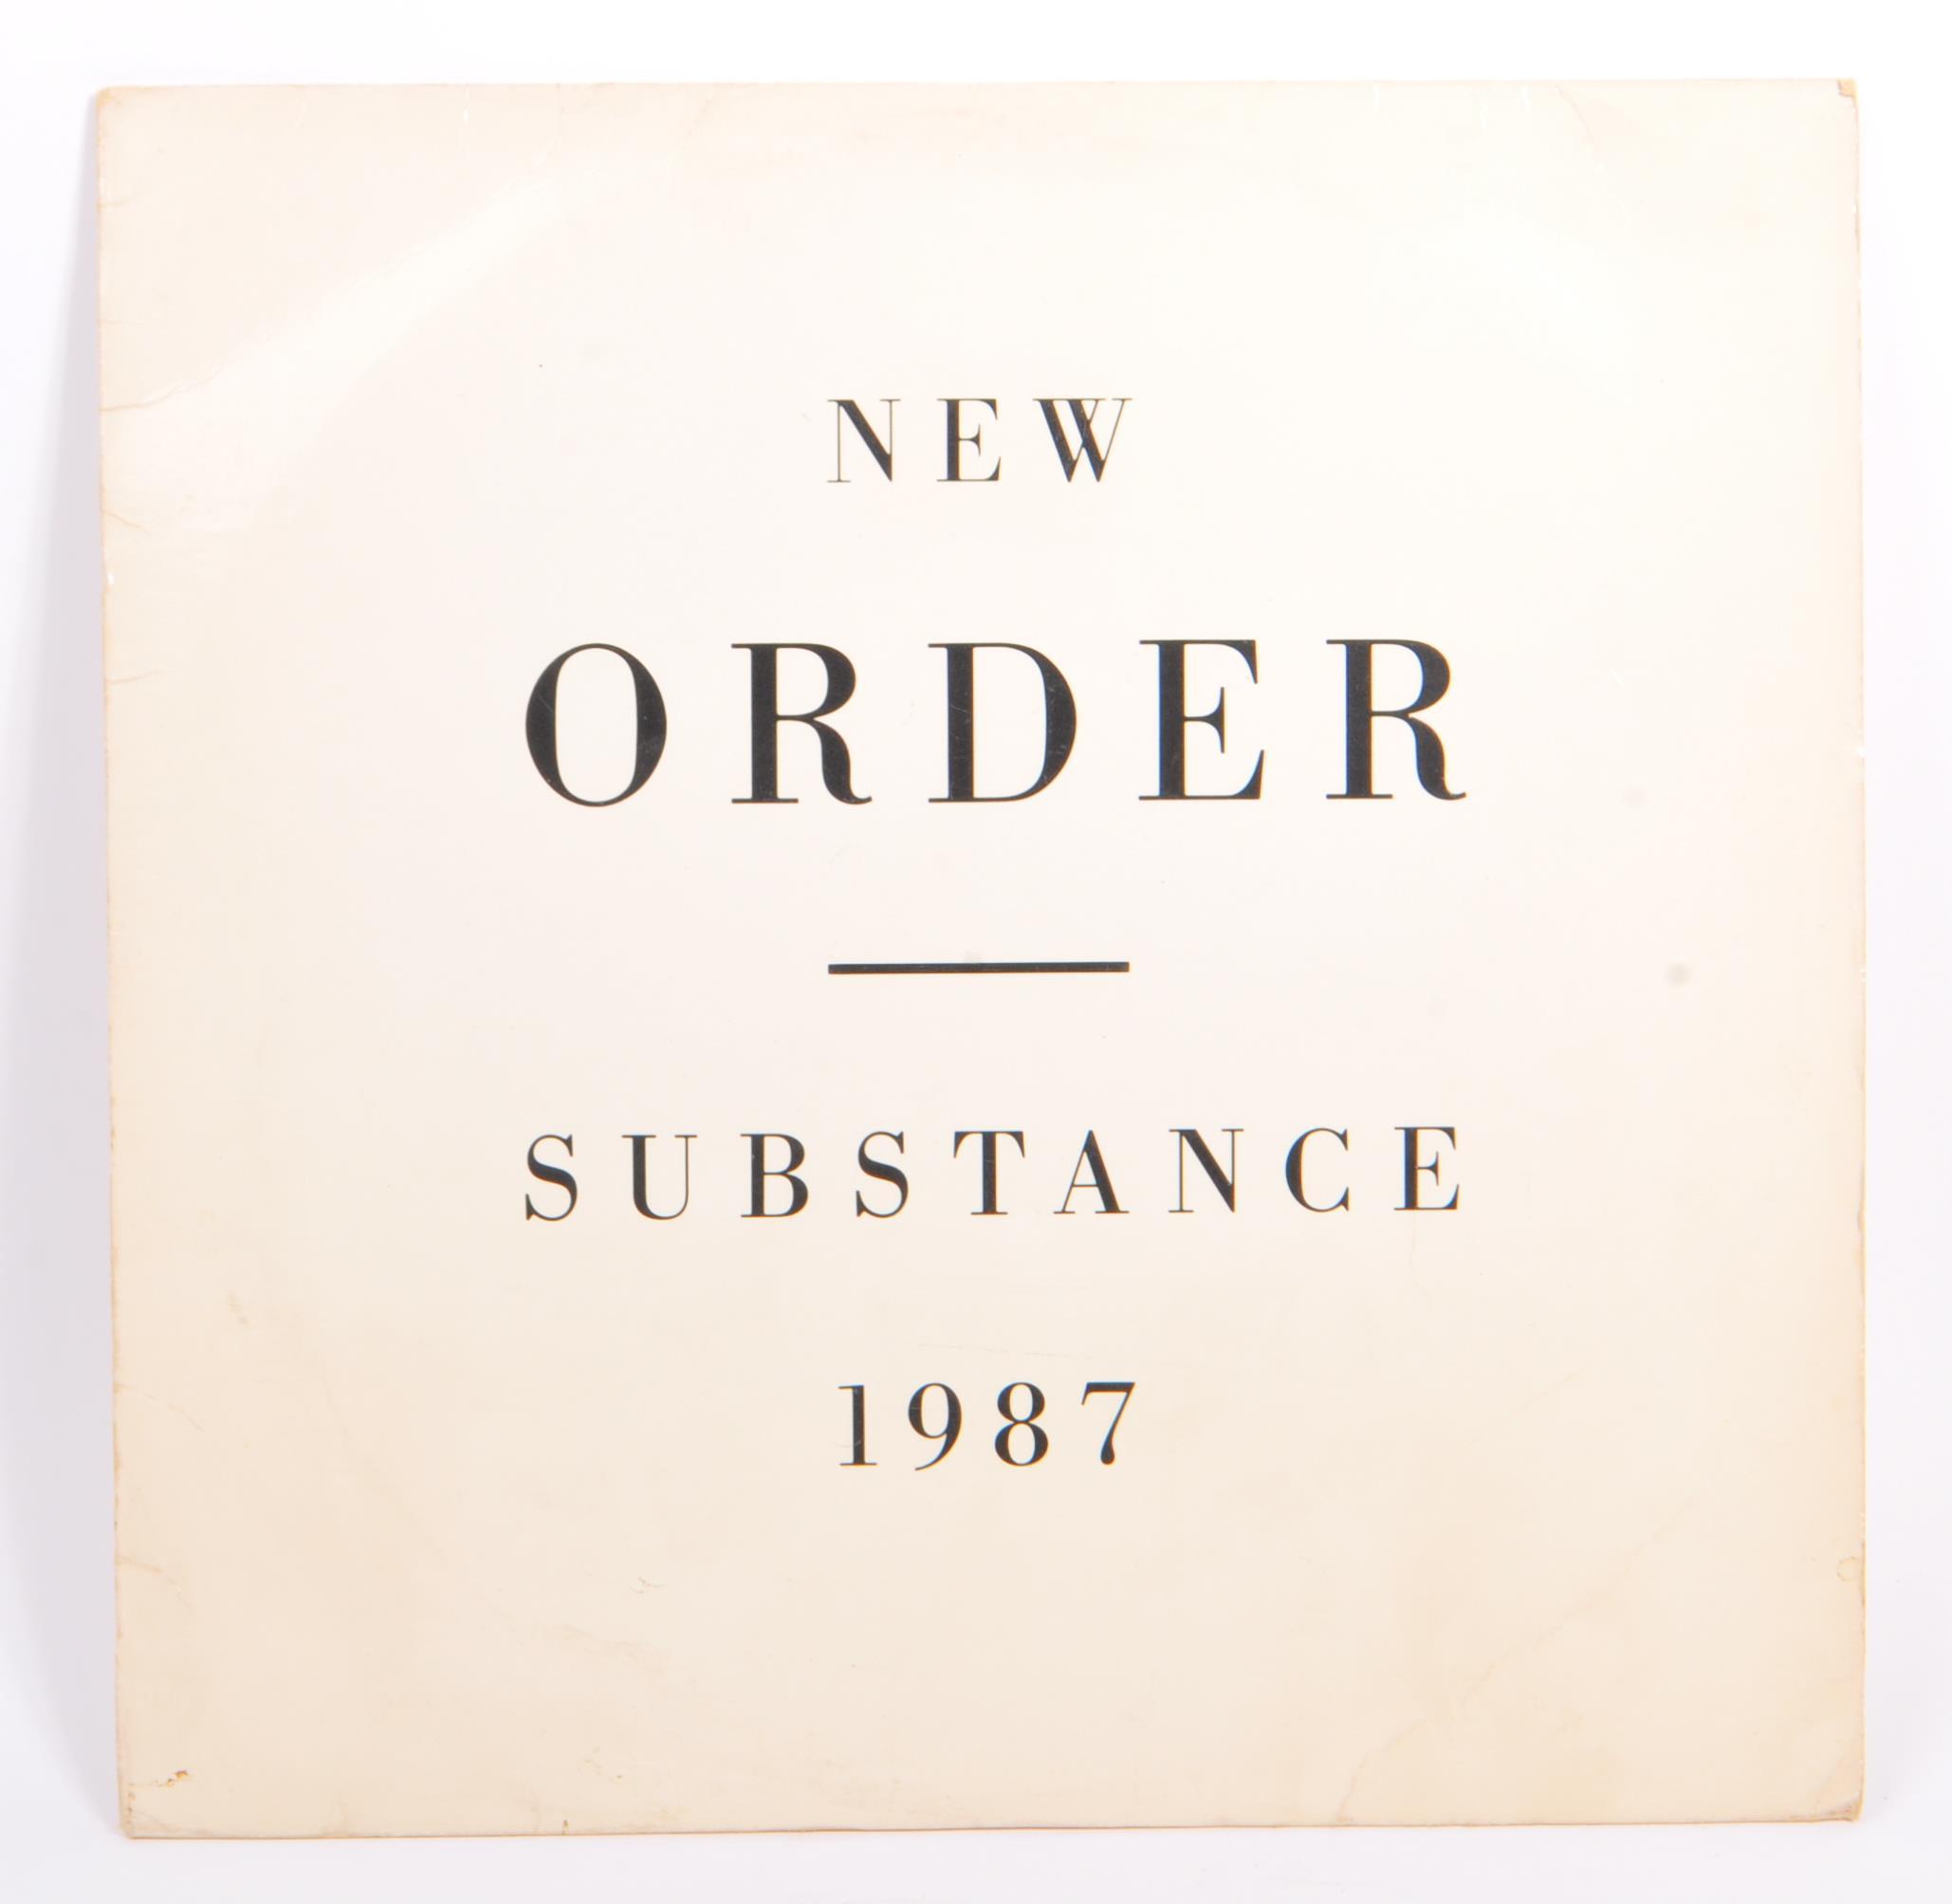 1987 NEW ORDER SUBSTANCE DOUBLE RECORD VINYL SET